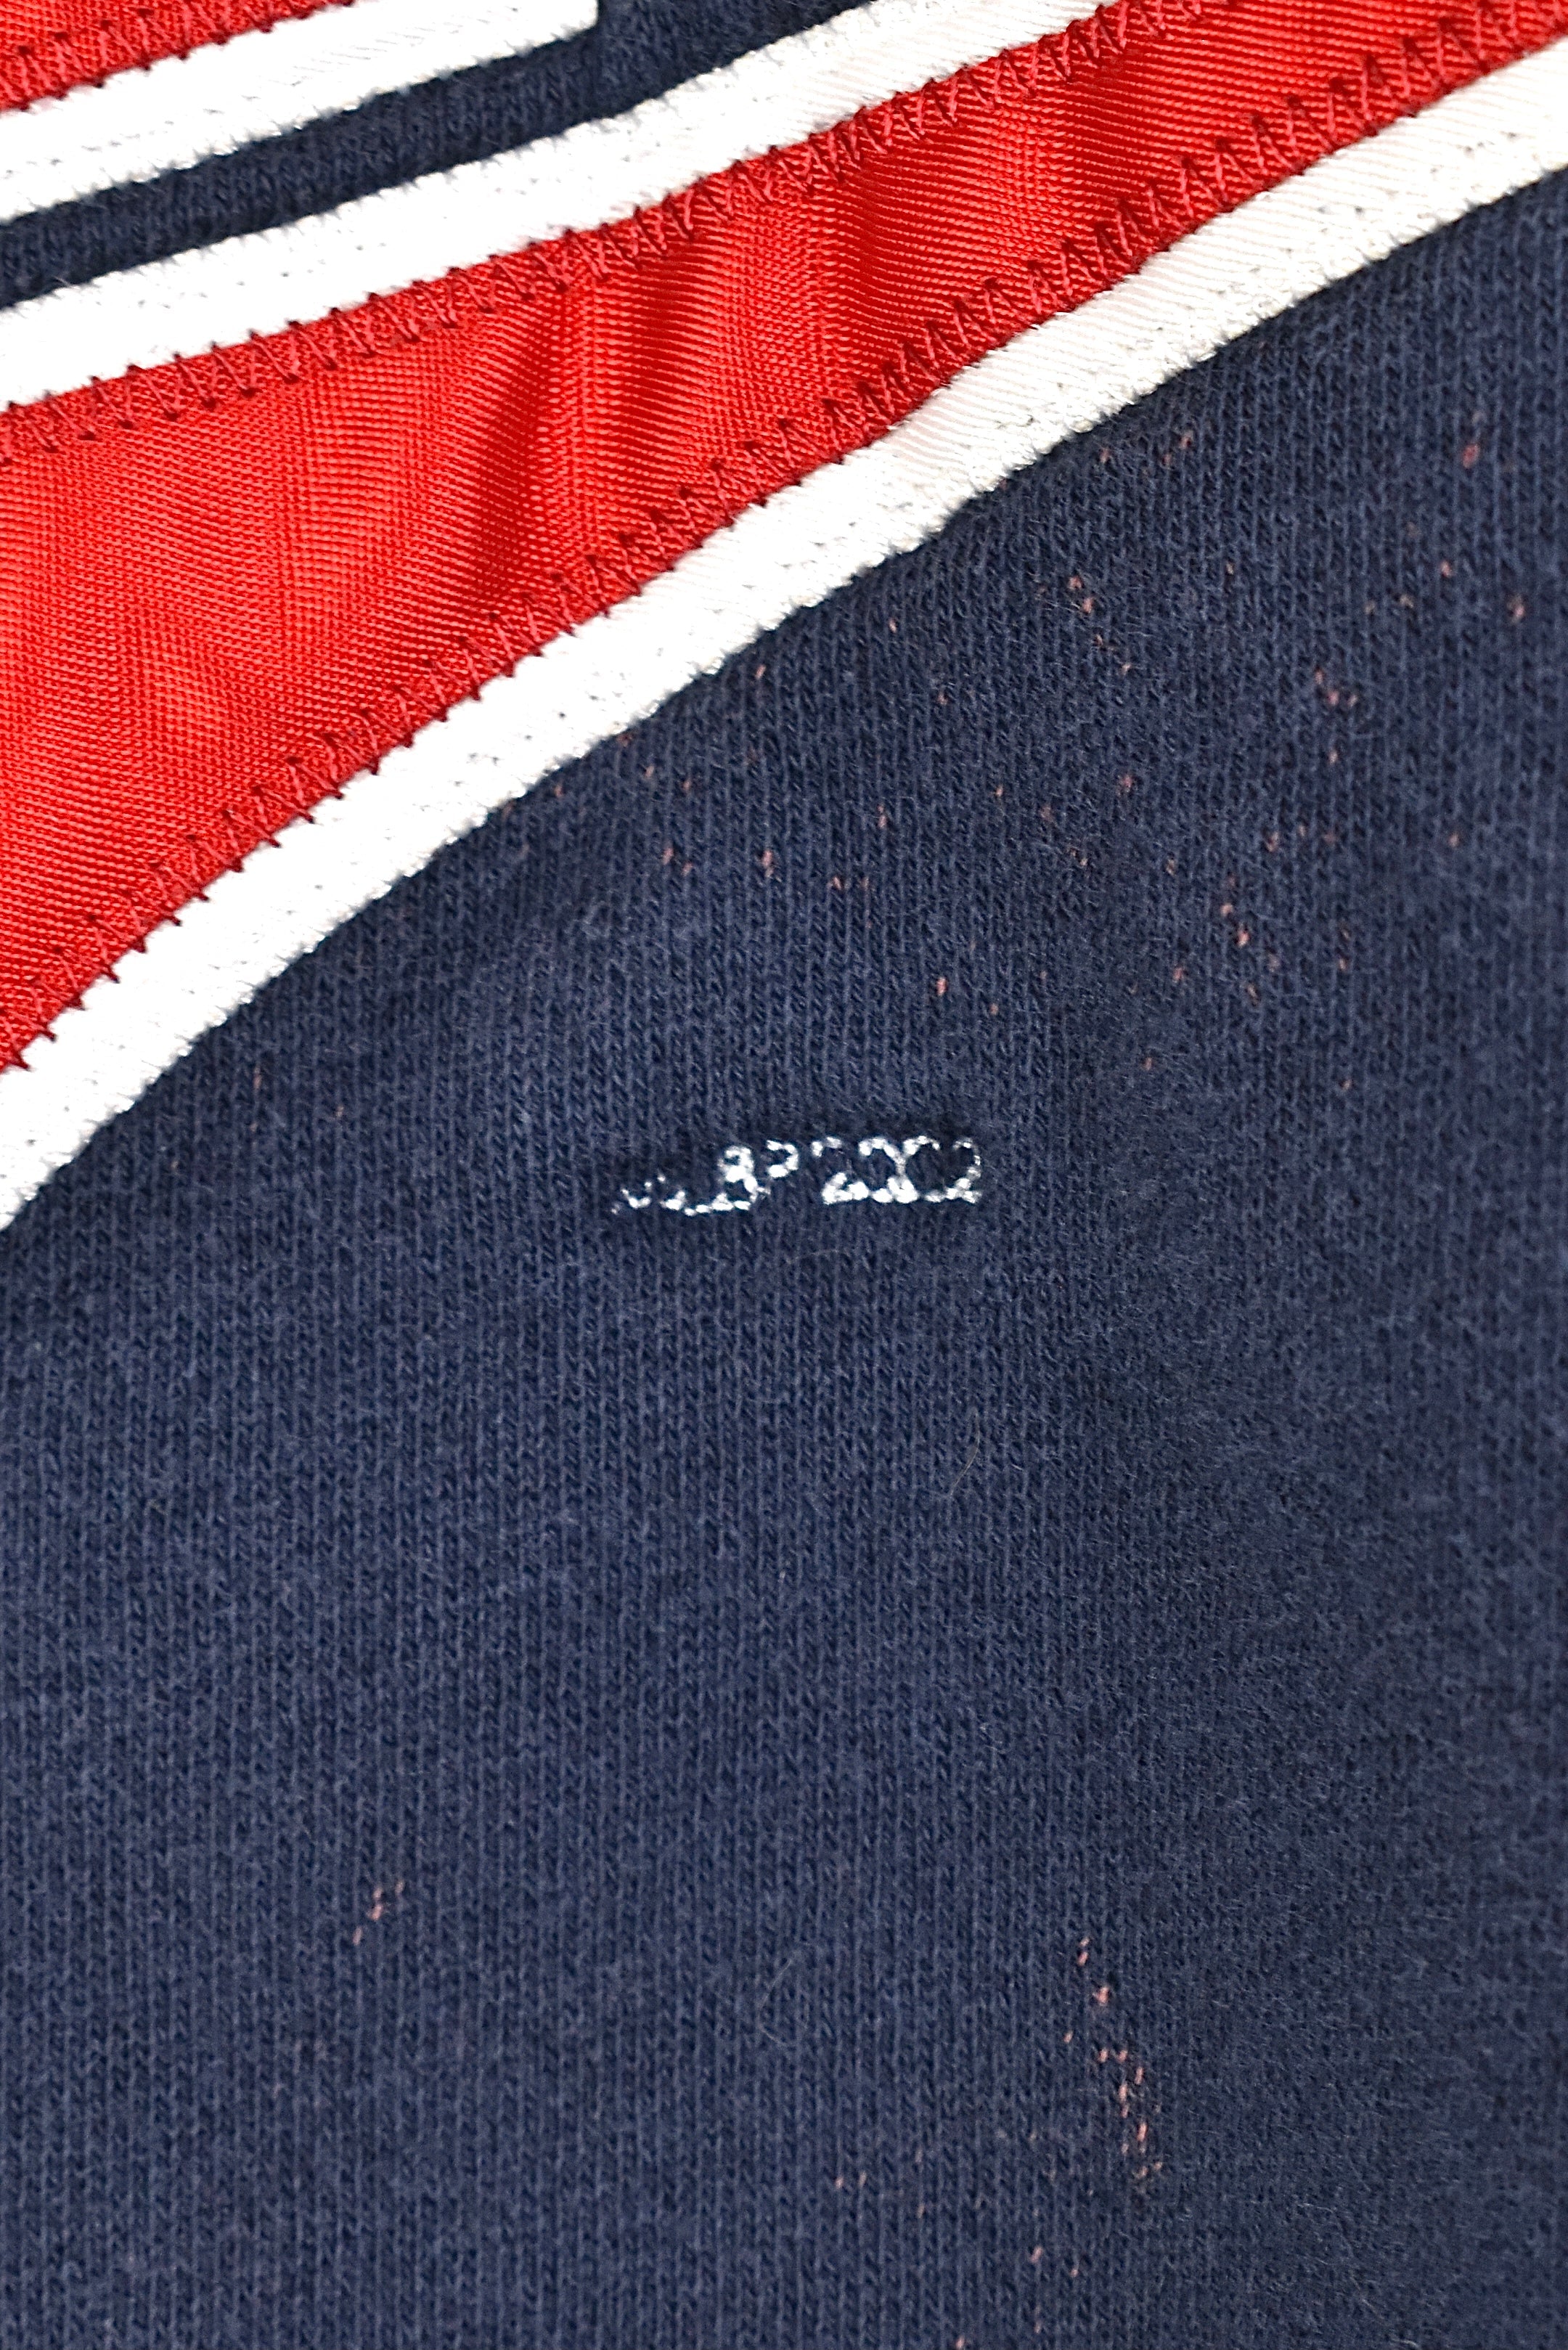 Vintage Minnesota Twins sweatshirt, MLB navy blue embroidered crewneck - AU XXXL PRO SPORT